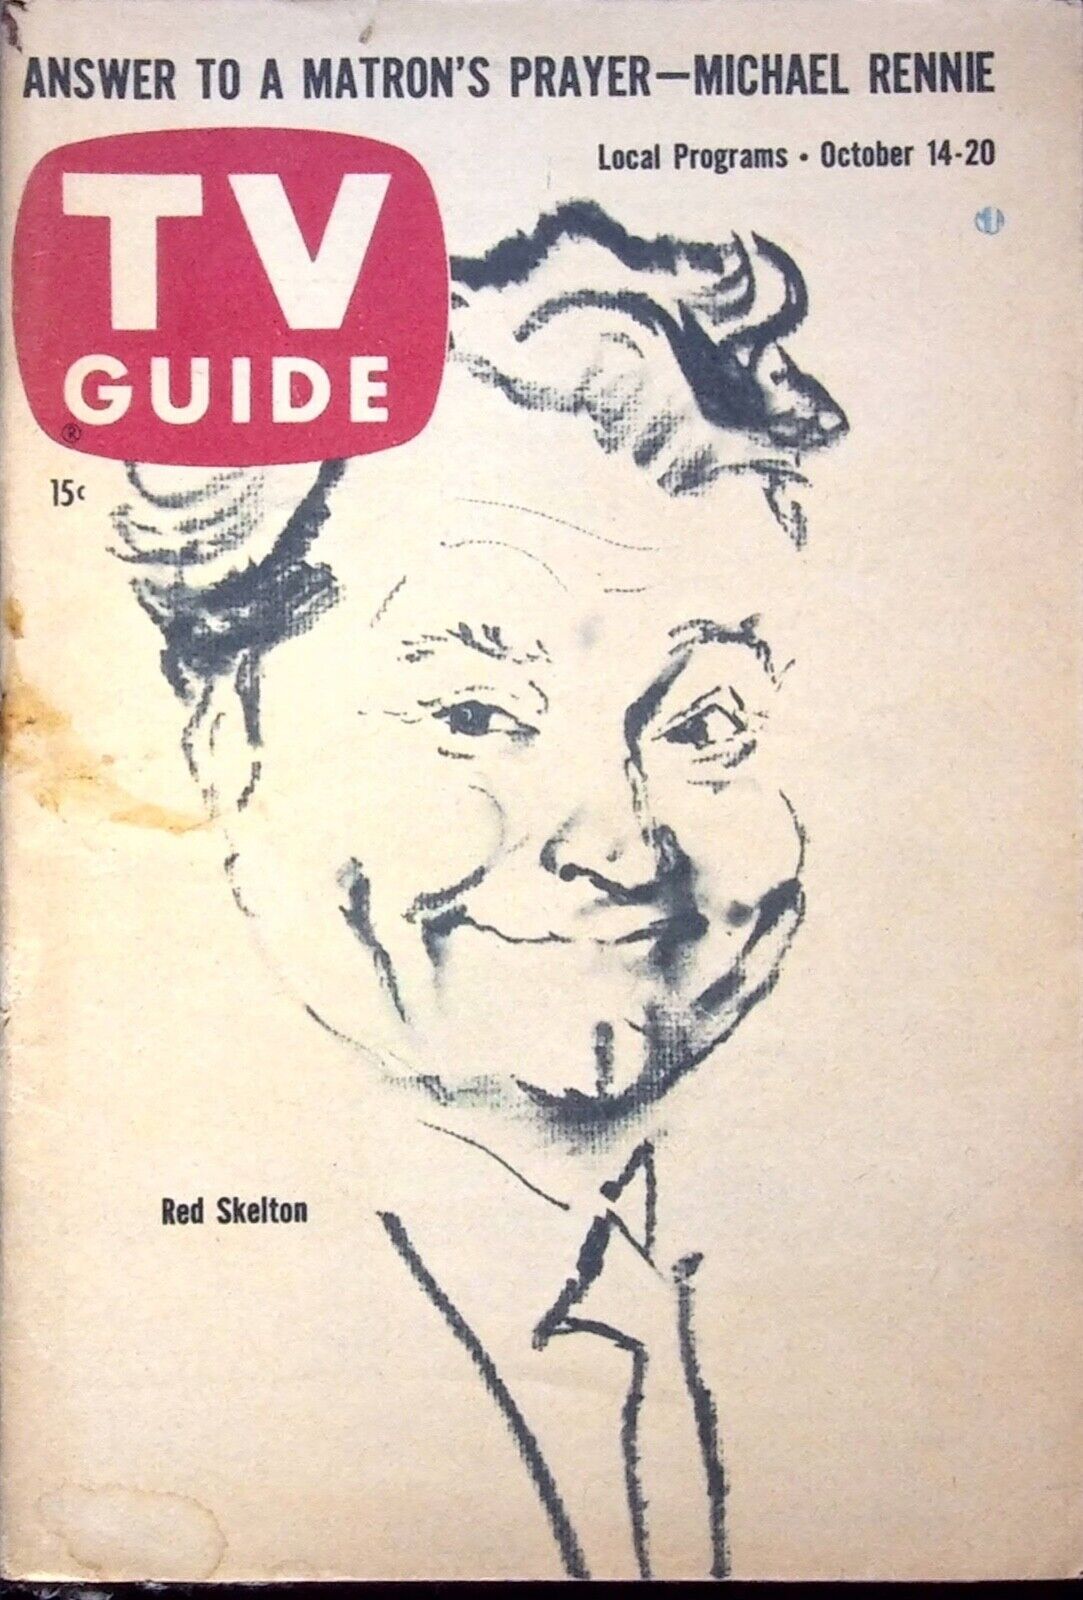 VTG. RED SKELTON - TV GUIDE MAGAZINE, VOL. 9, NO. 41 • OCT. 14, 1961 ISSUE #446